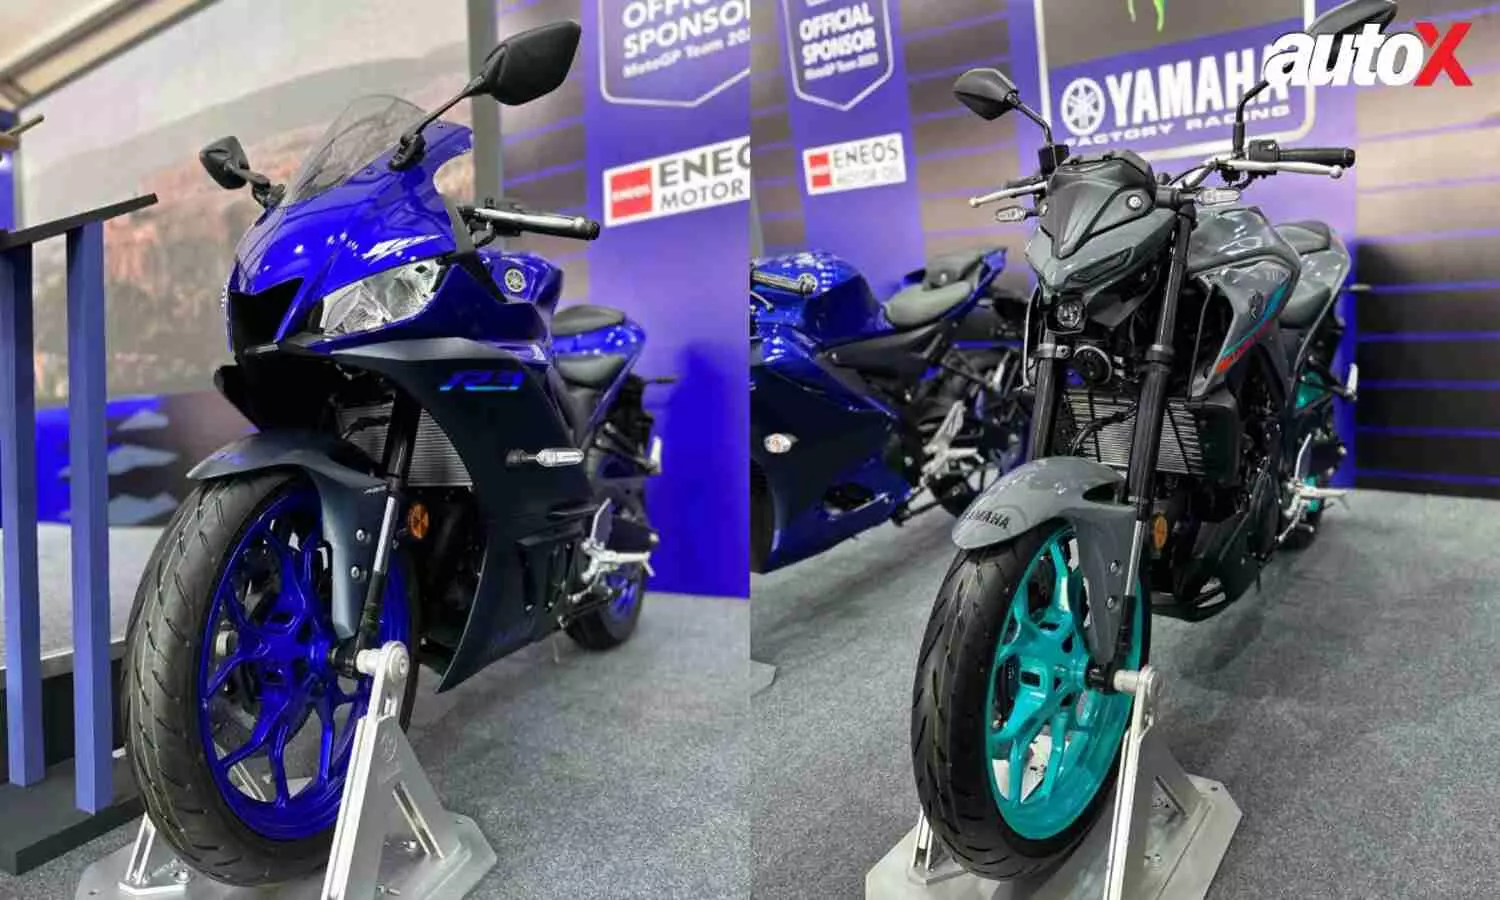 Yamaha R3 and MT 03 bikes